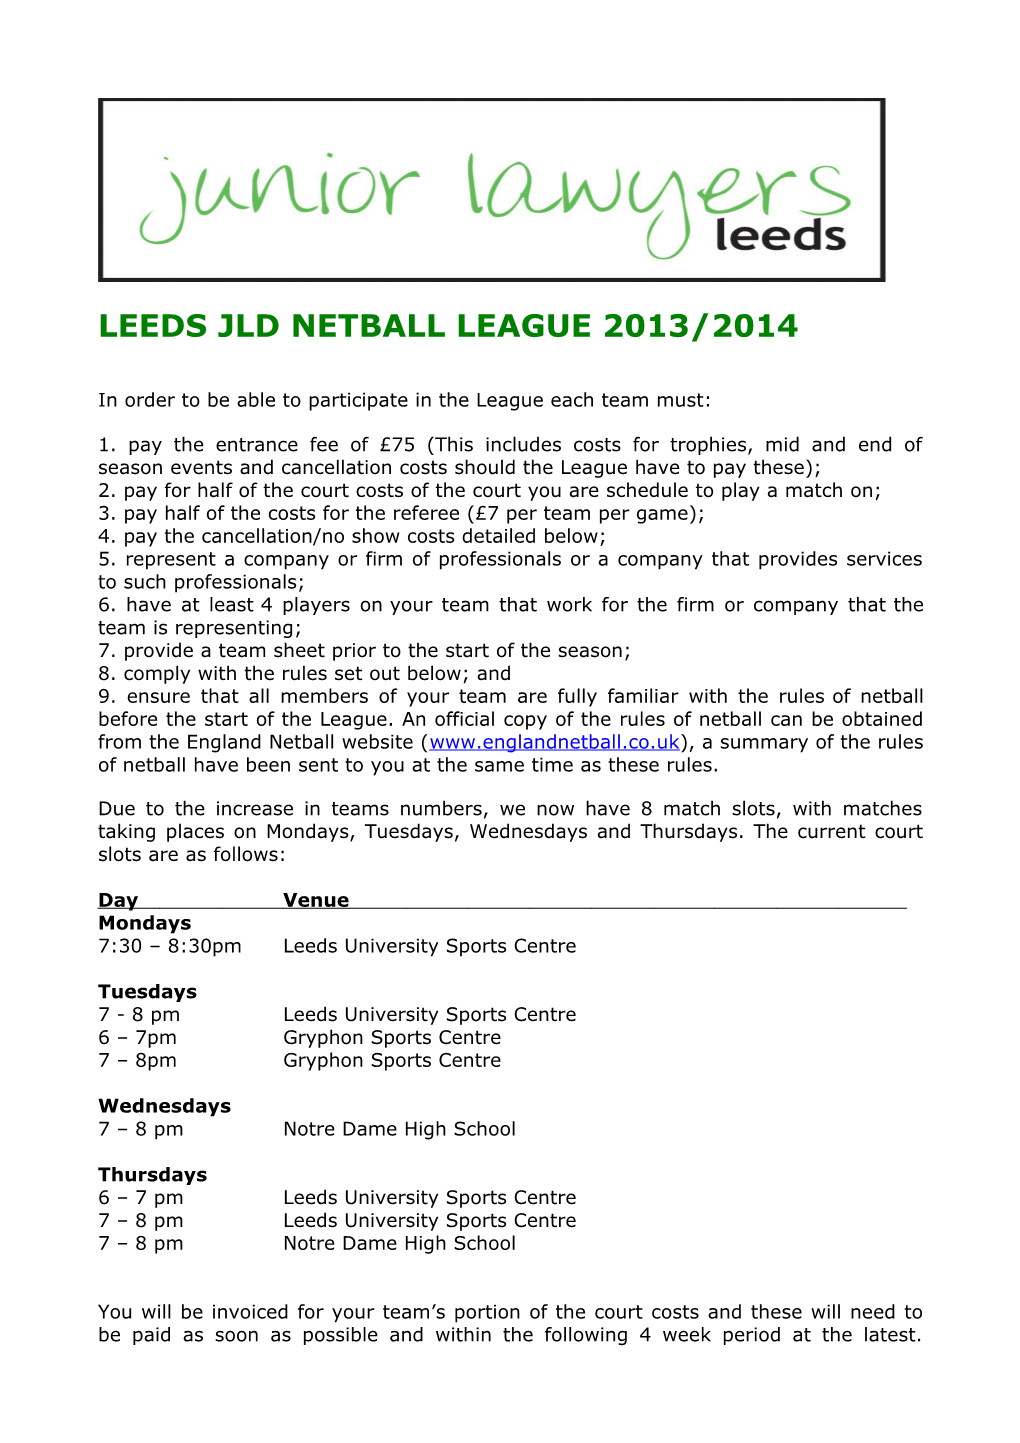 Leeds Jld Netball League 2013/2014